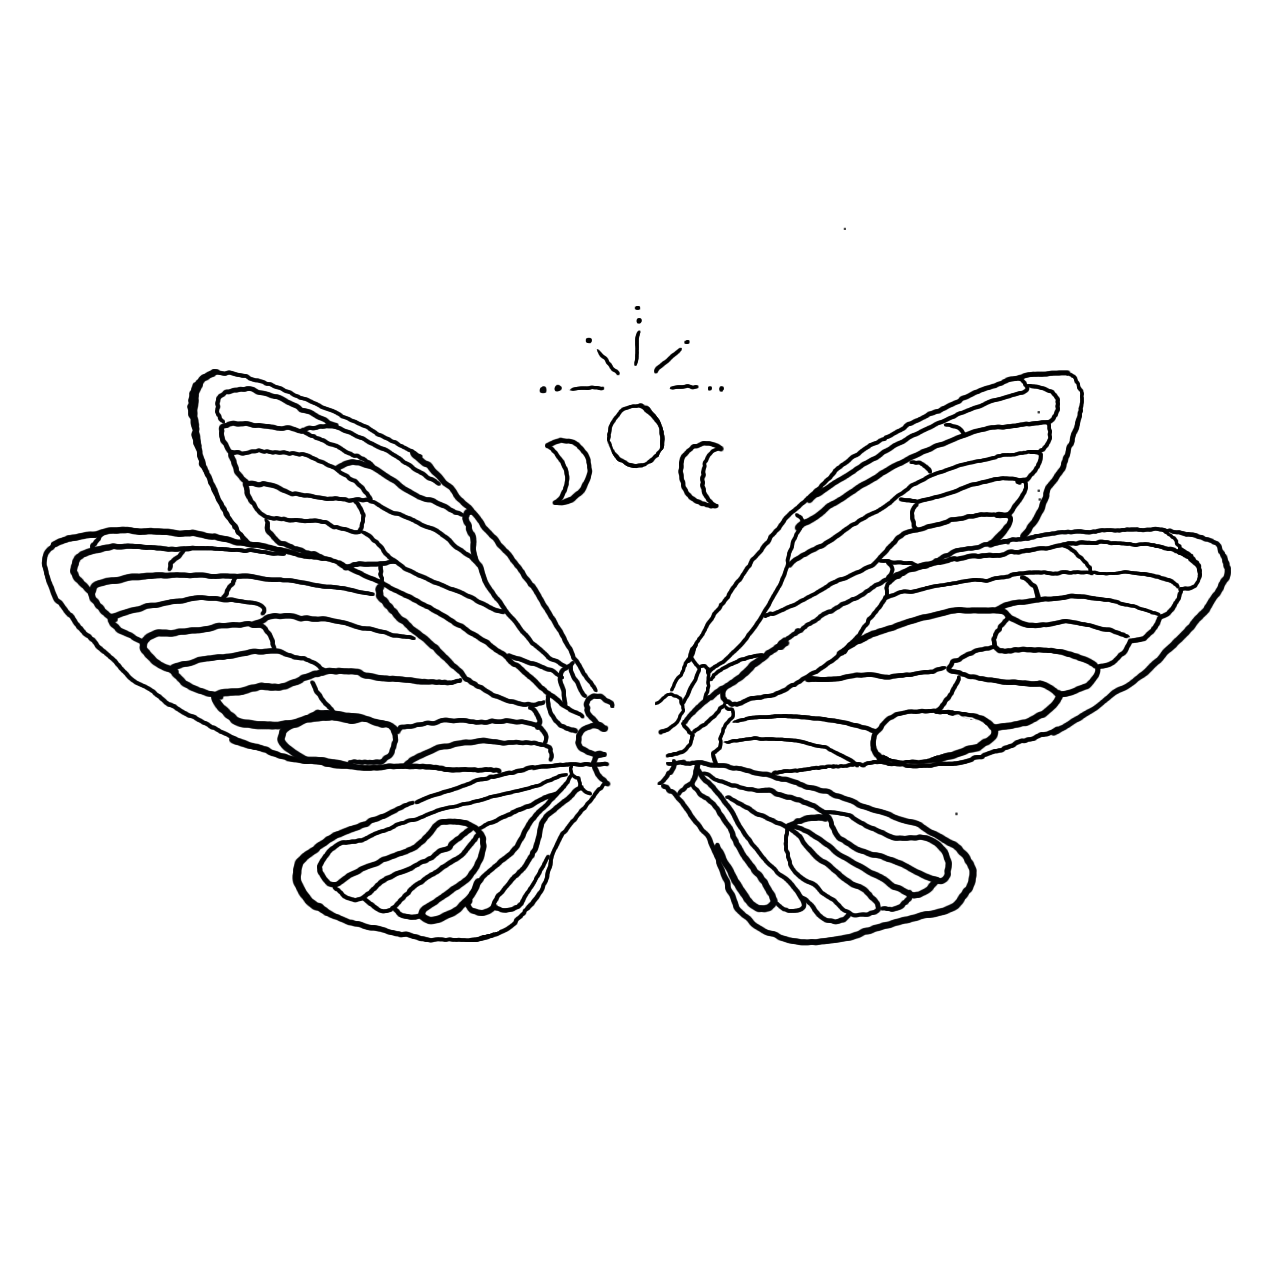 Fairy wings doodle rdoodles